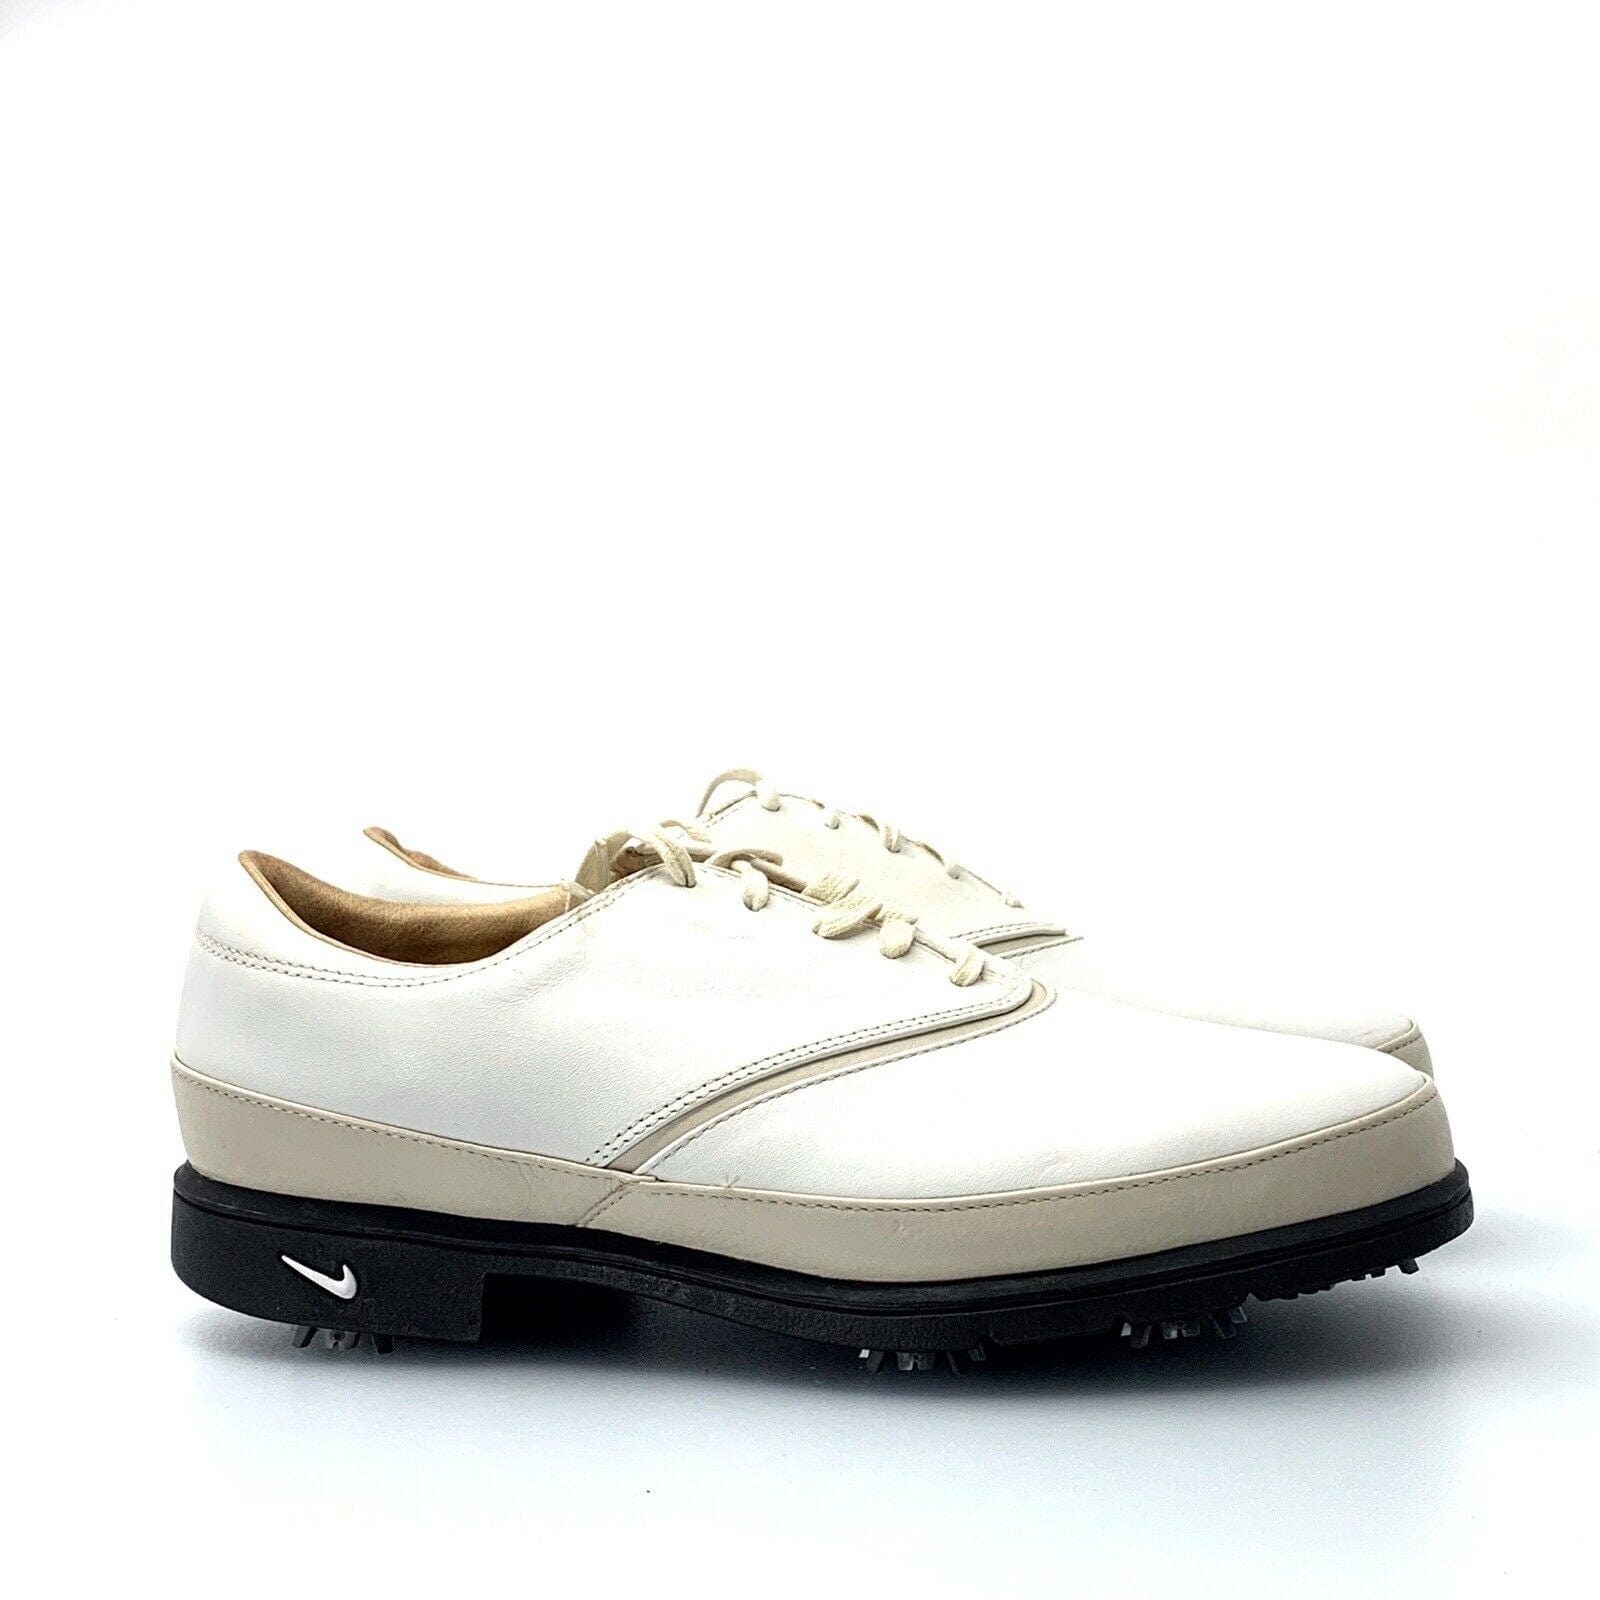 NEW Nike Womens Leather Air Comfort Verdana Lace Up Golf Shoes, White - Size 7 - parsimonyshoppes